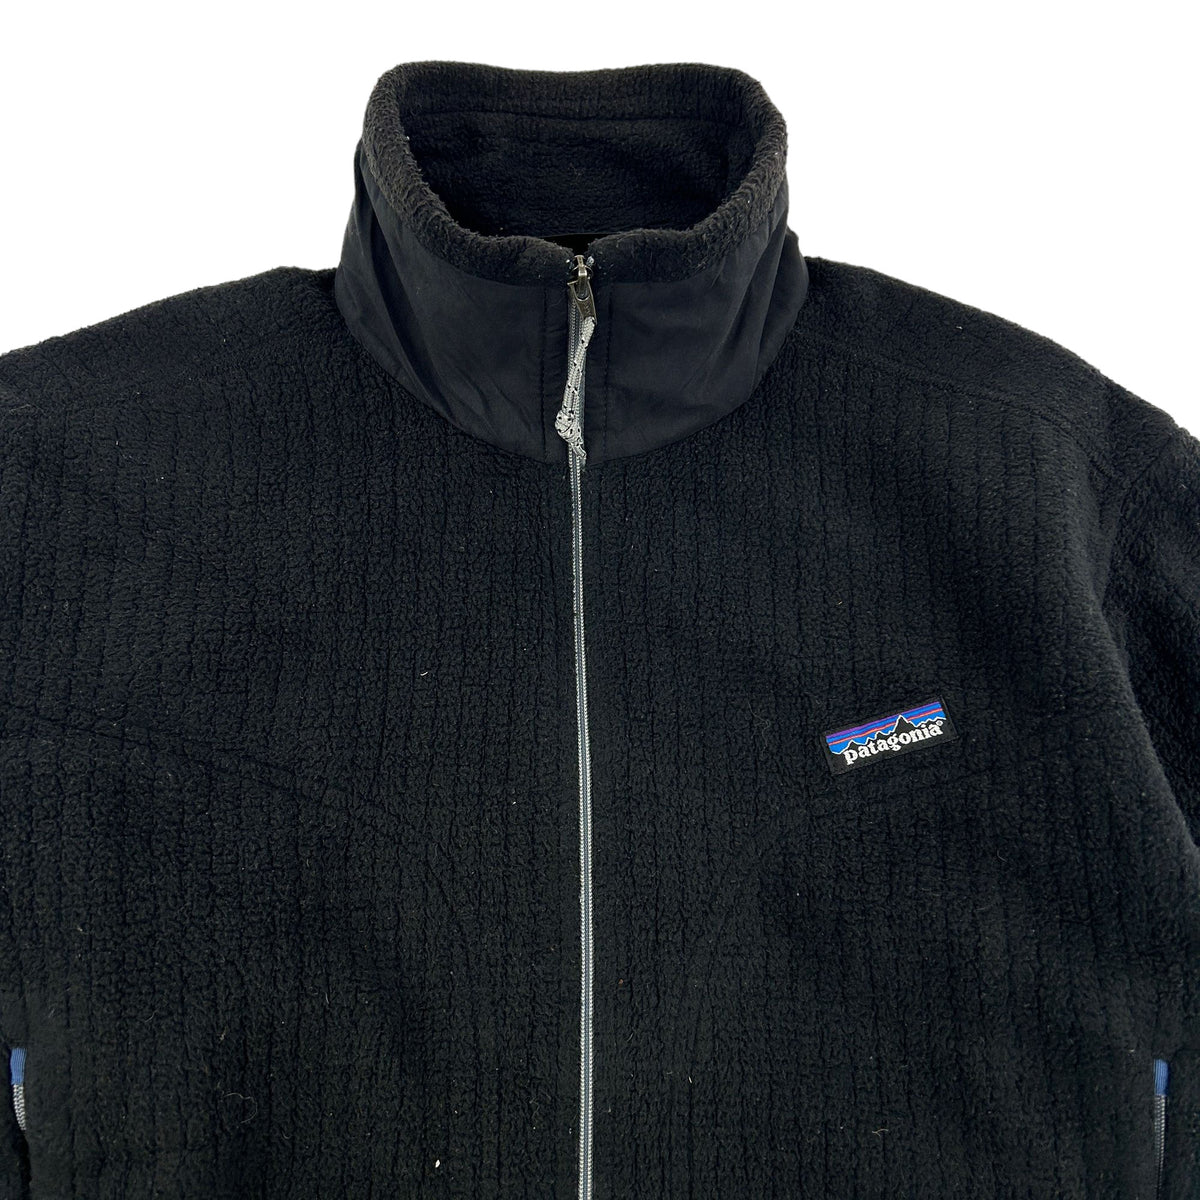 Vintage Patagonia Zip Fleece Size S